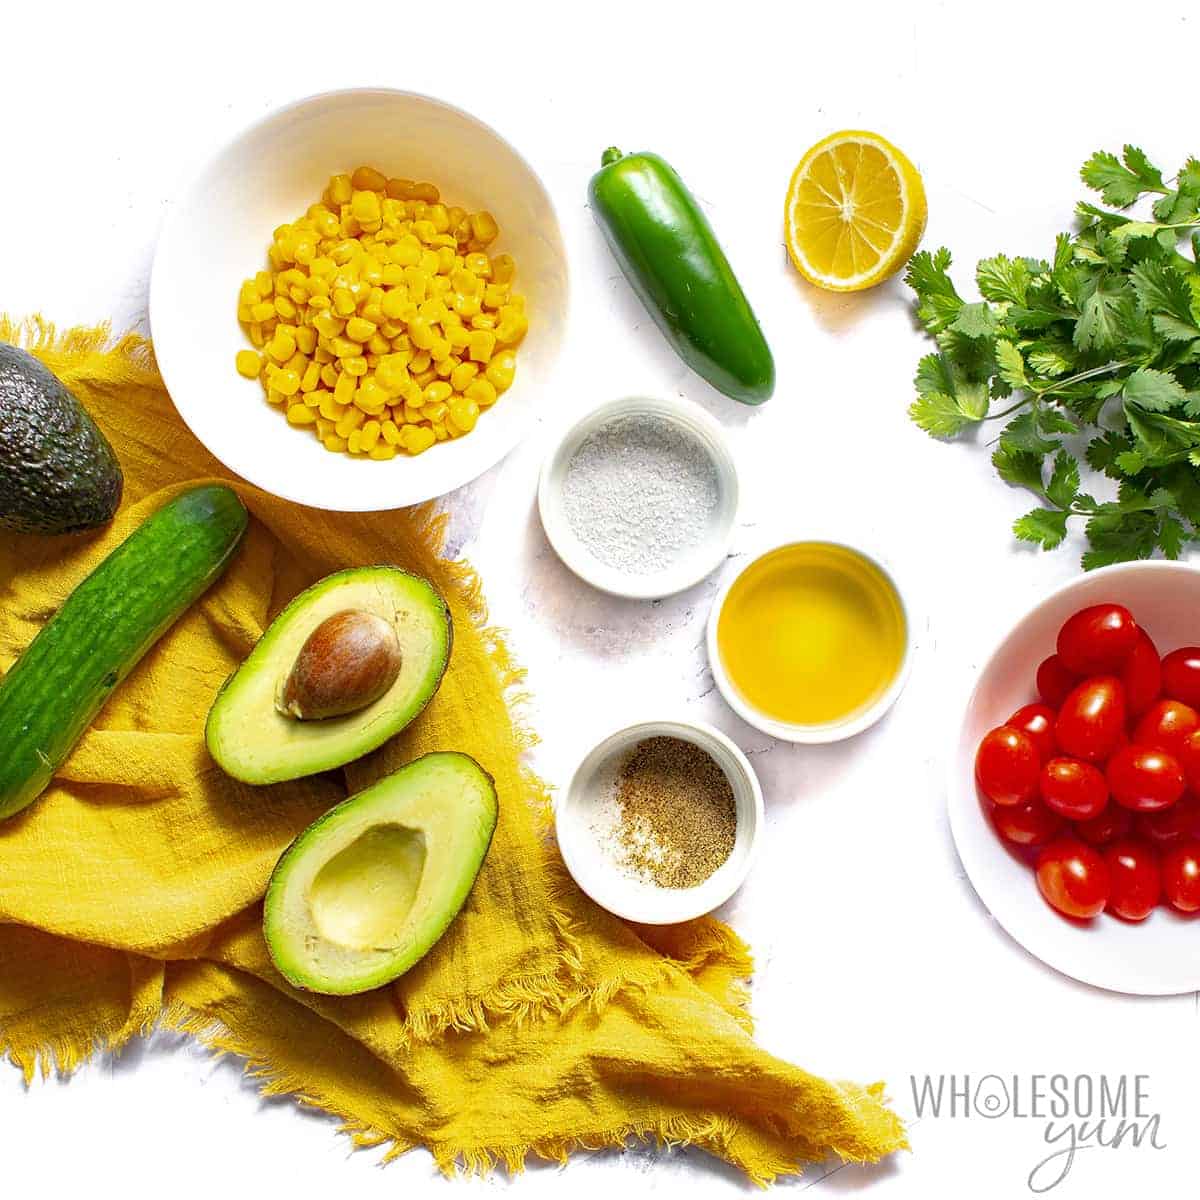 Avocado Corn Salad Ingredients in a Bowl.